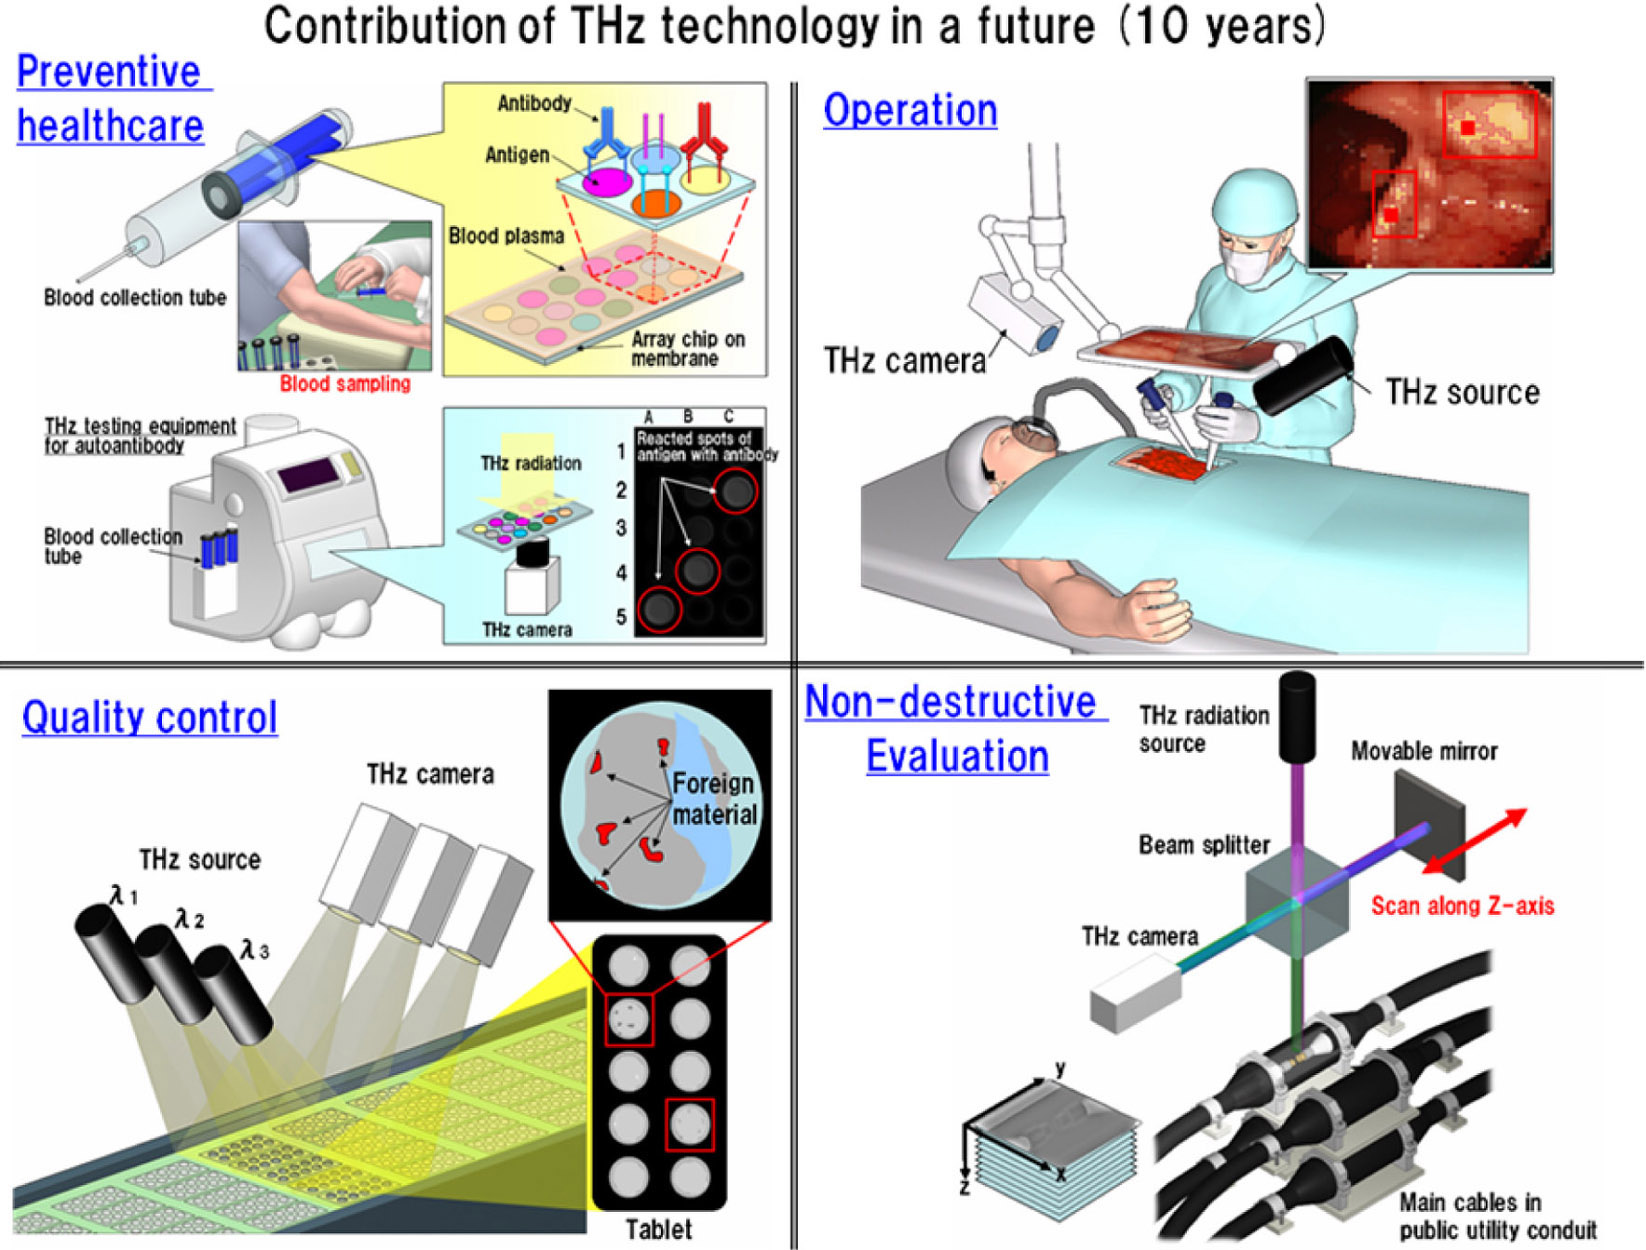 Terahertz imaging for detection or diagnosis